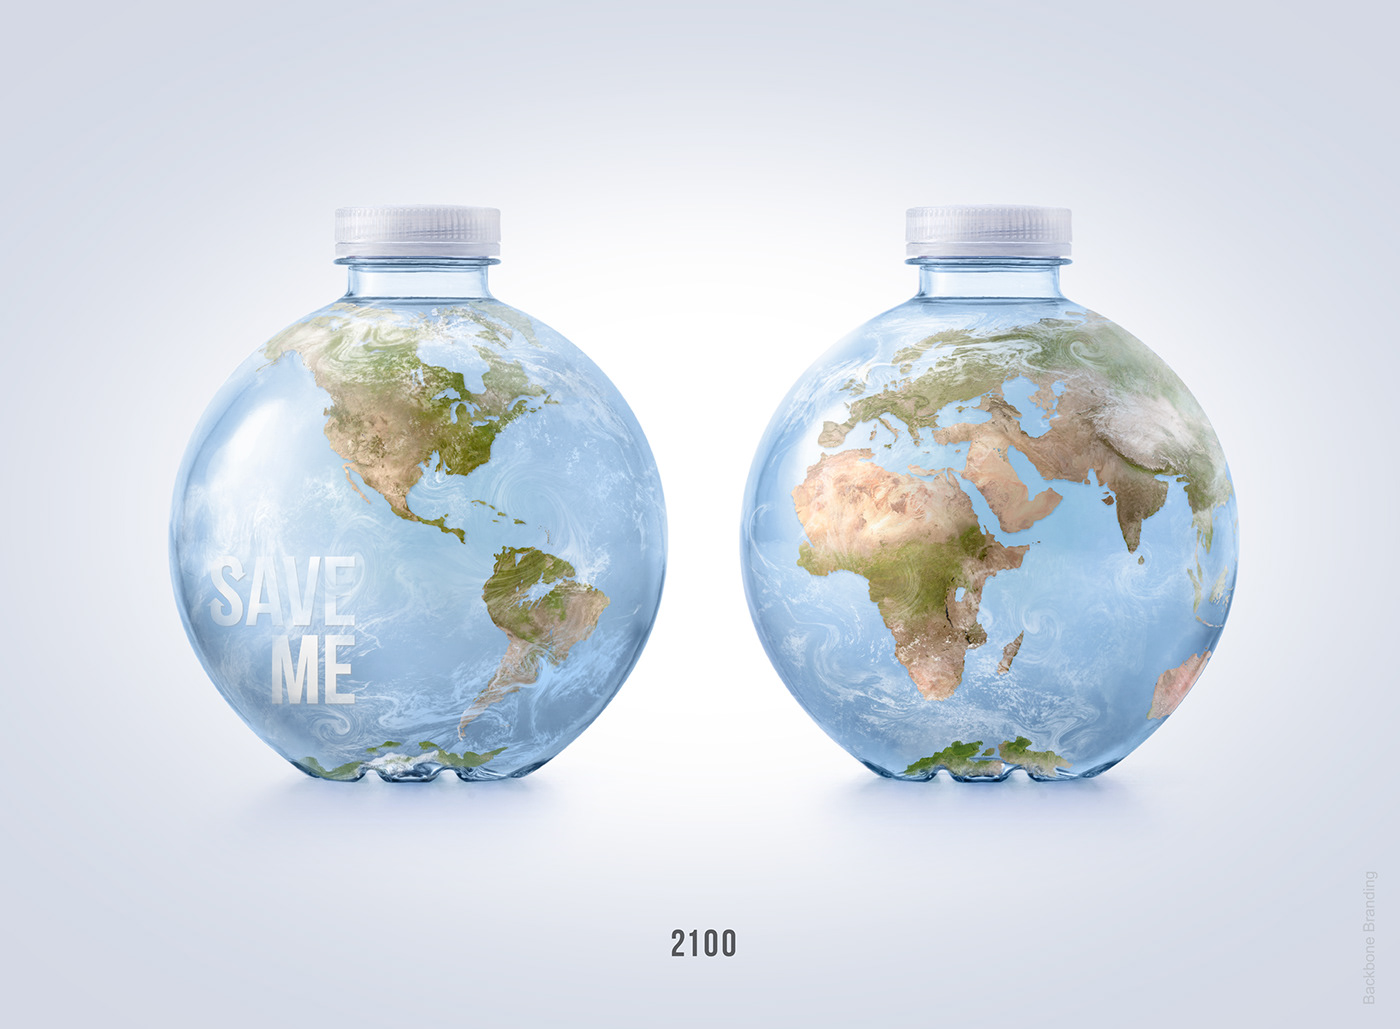 design Packaging planet water